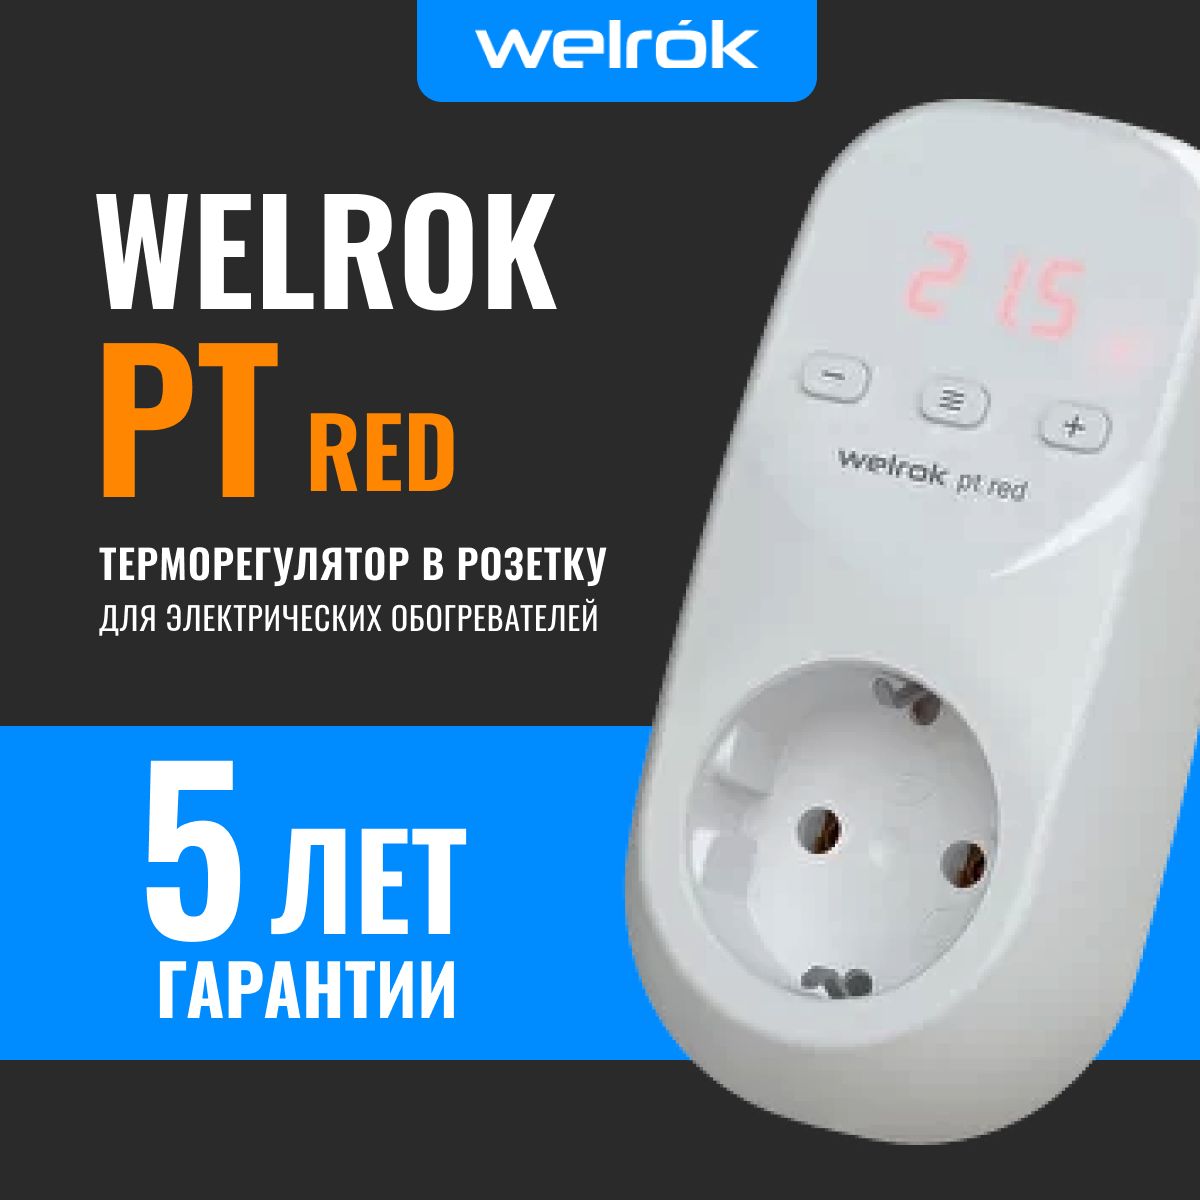 Welrok. Welrok терморегулятор. Welrok St терморегулятор. Welrok pt Red терморегулятор розеточный для обогревателей помещении обзор. U 238 welrok.